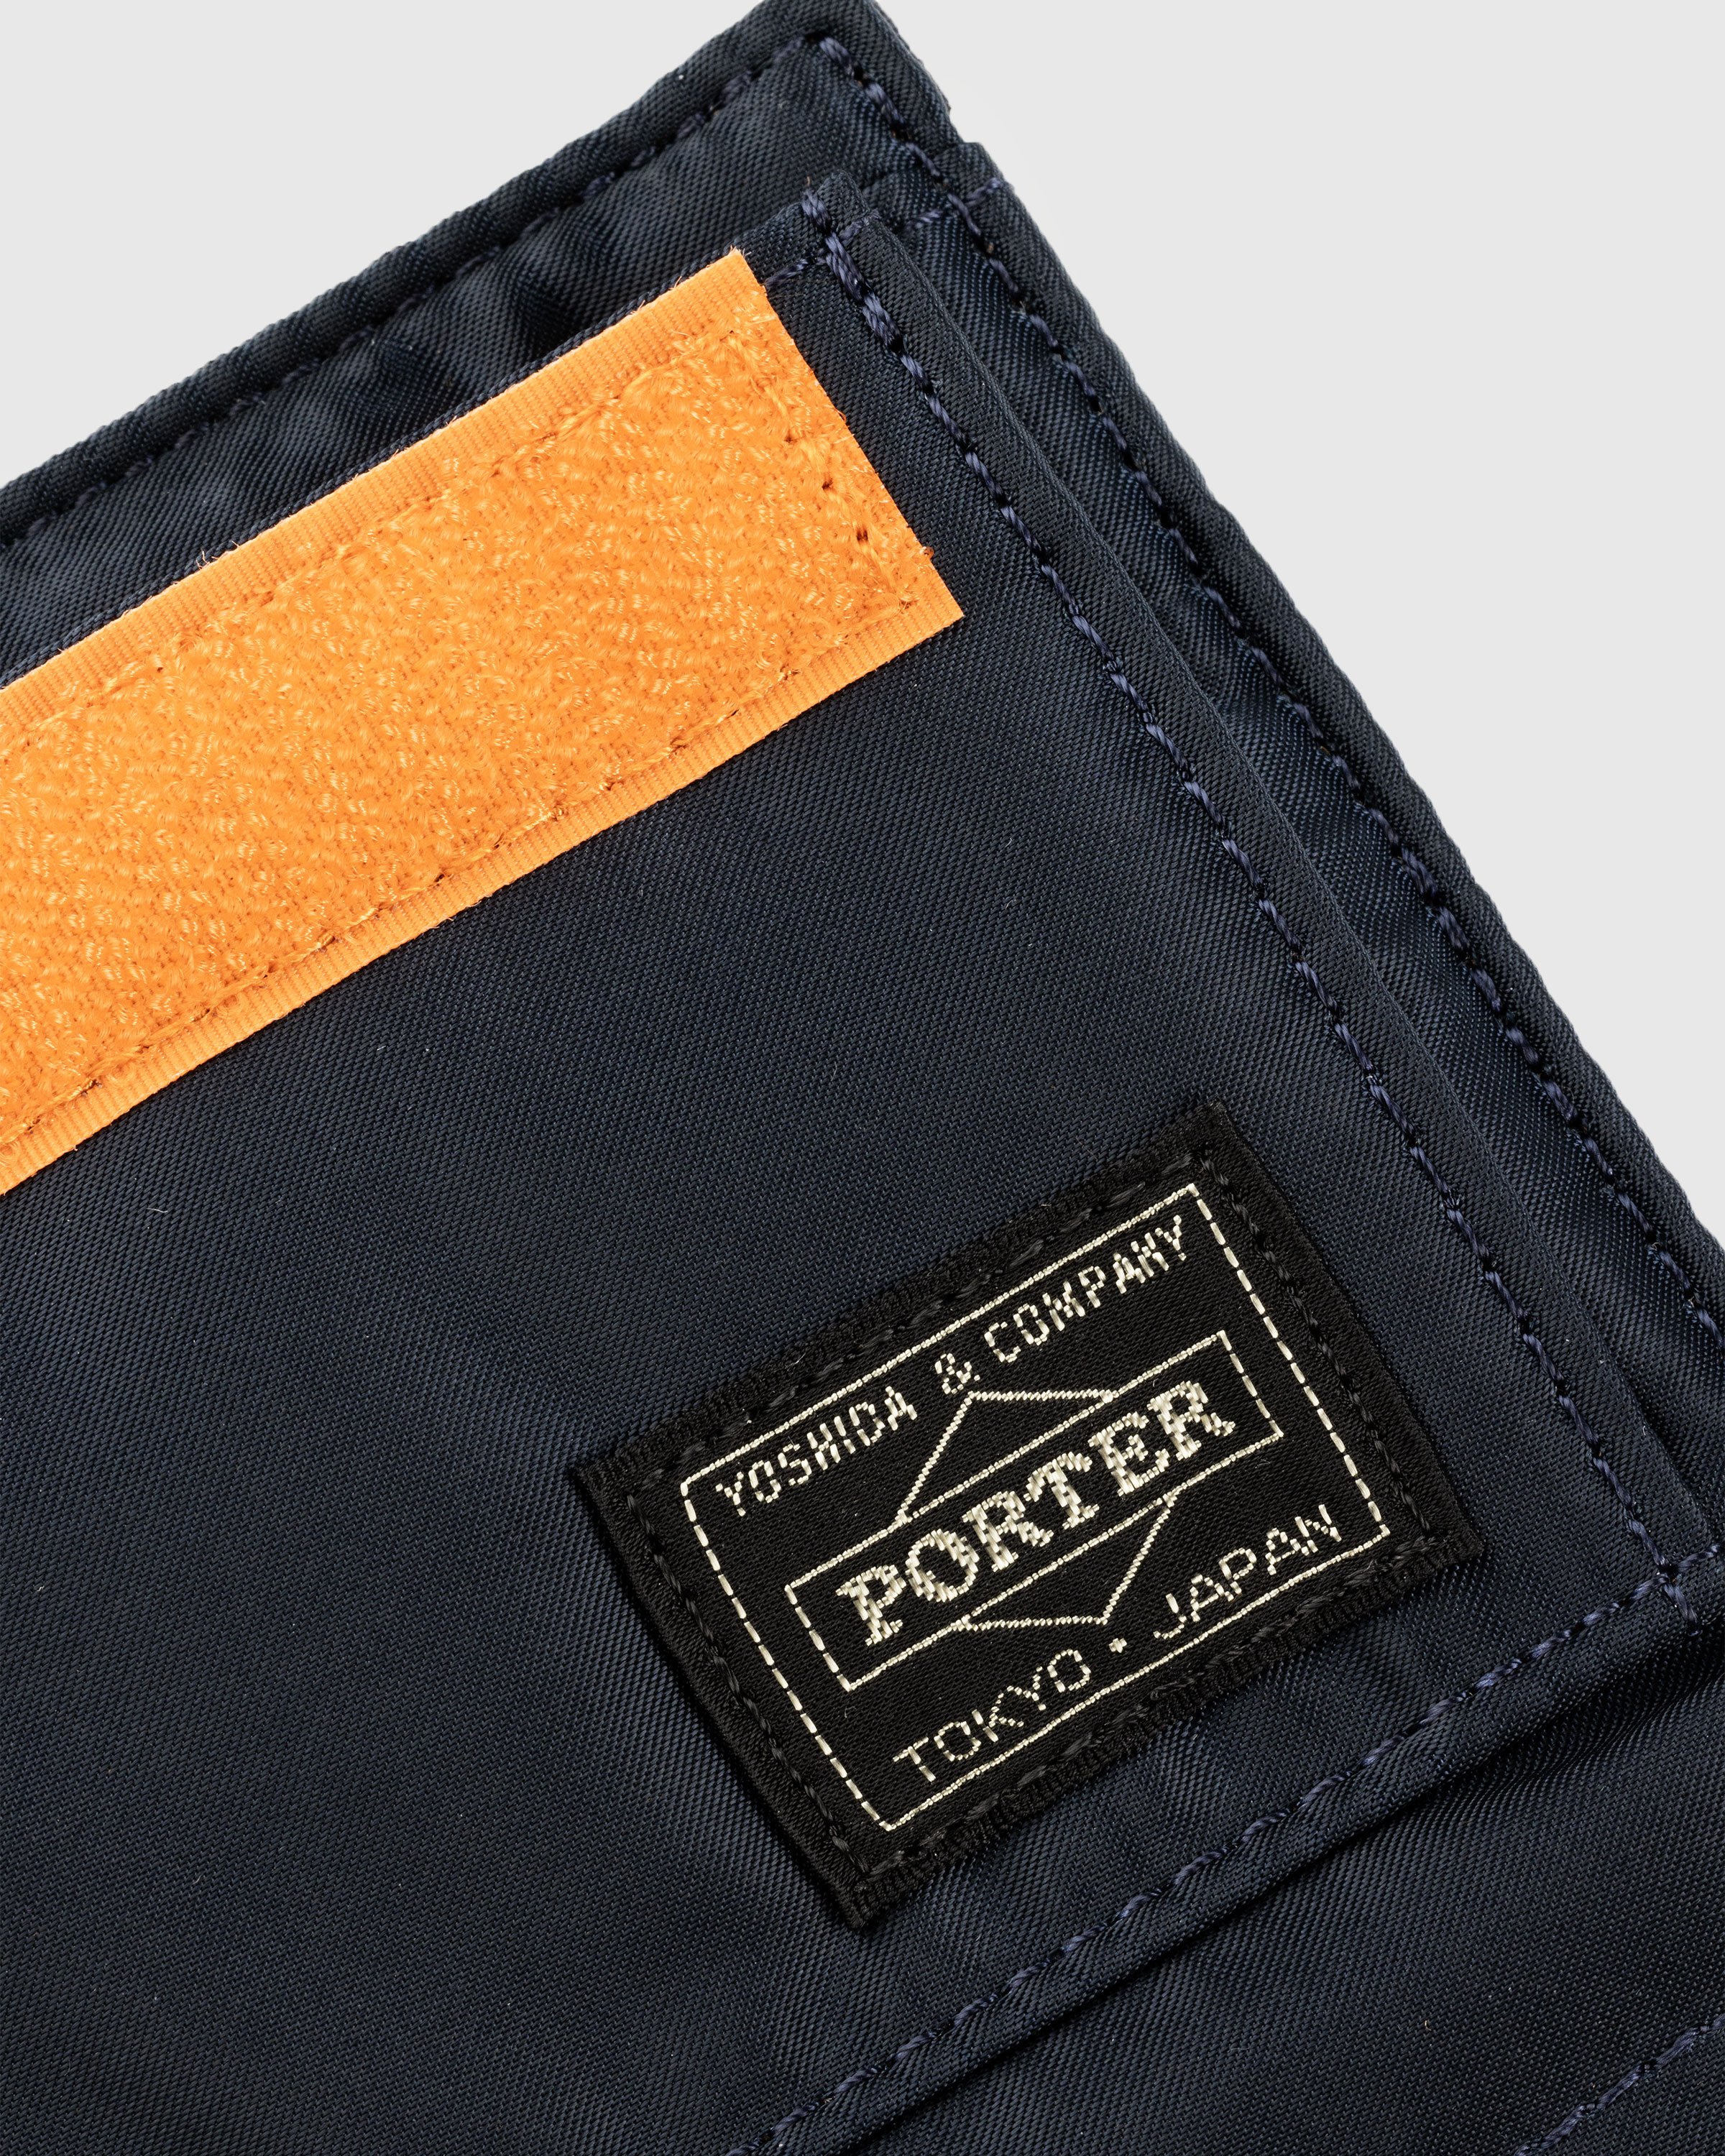 Porter-Yoshida & Co. - Tanker Wallet Black - Accessories - Black - Image 5